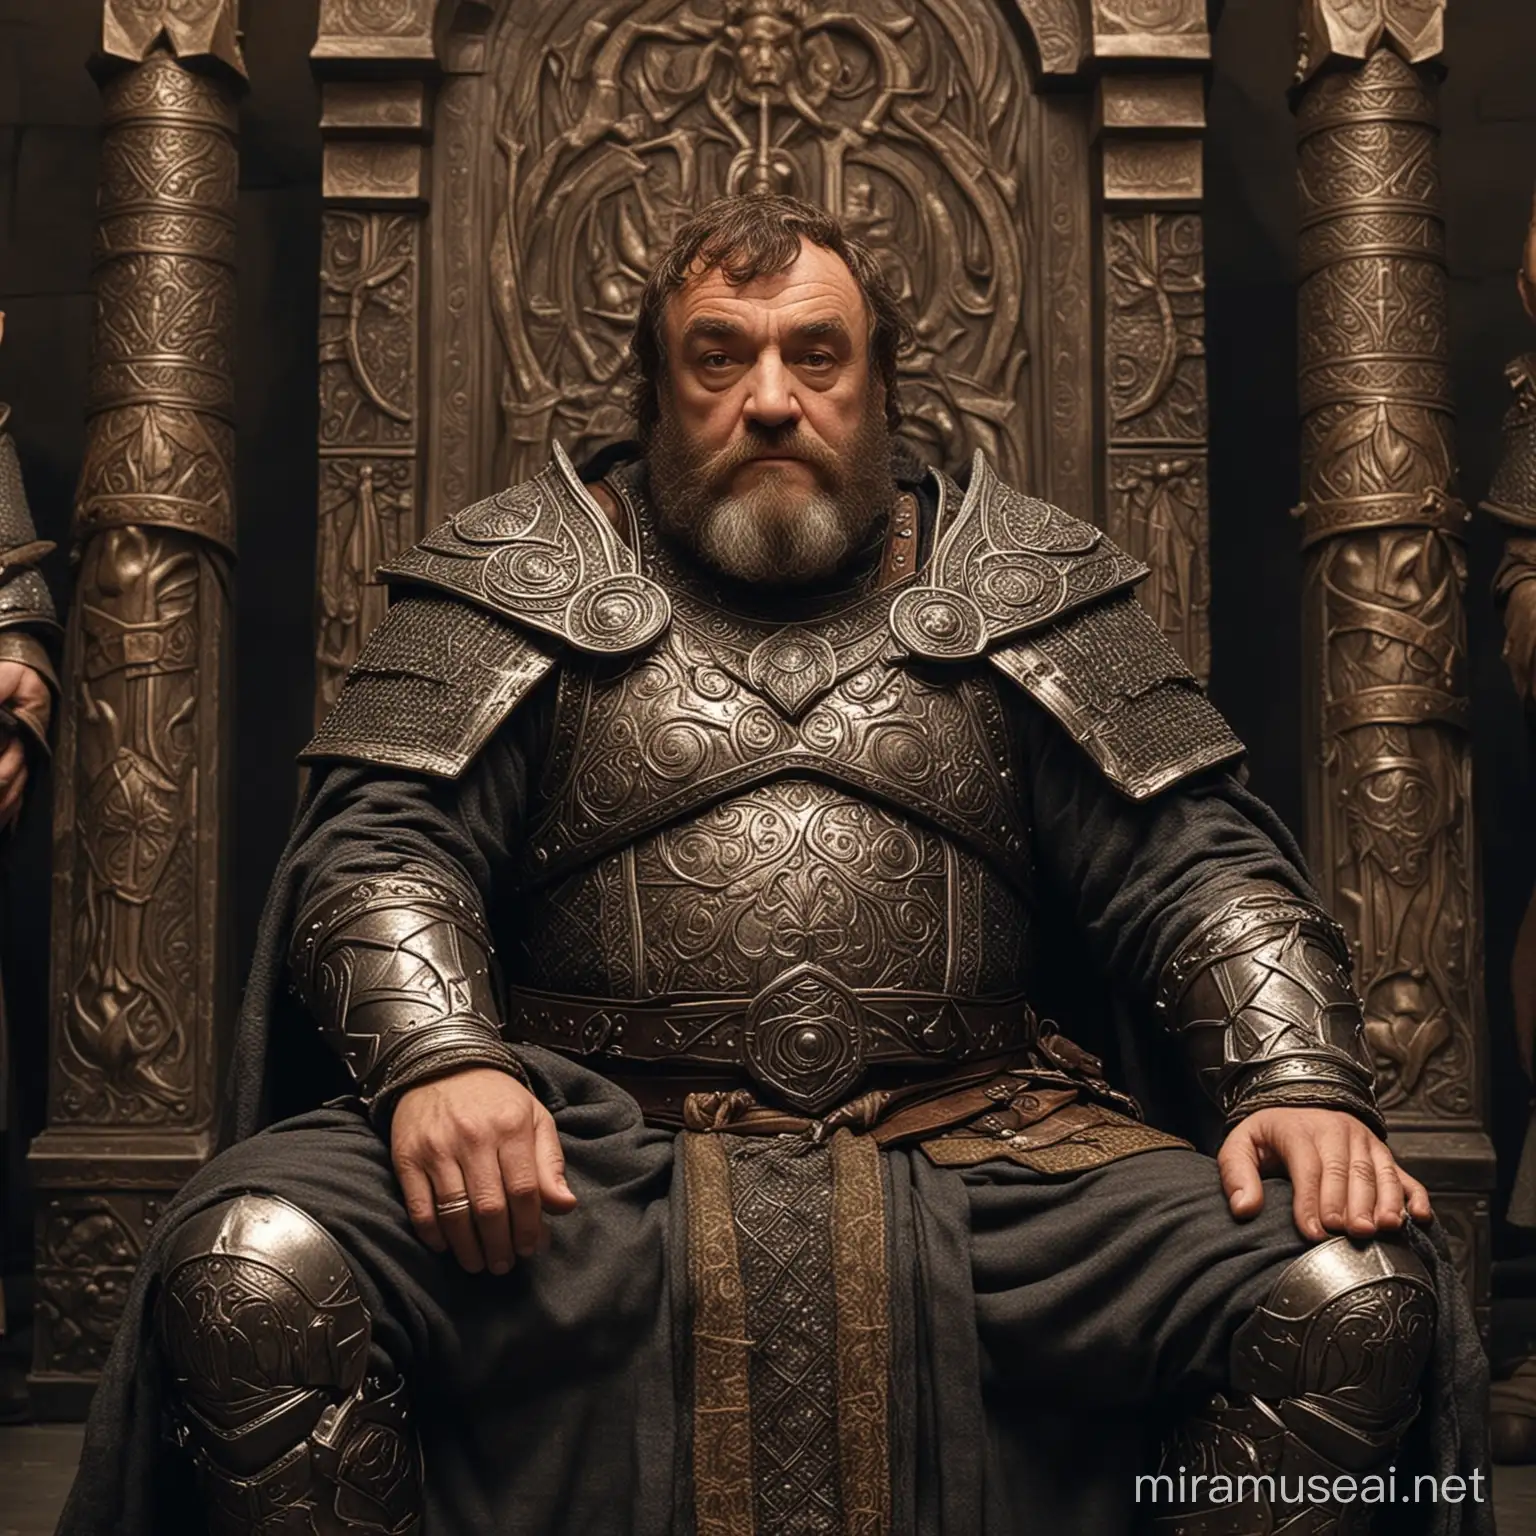 John Rhys-Davies as dwarven king in a throne room, clad in armor.